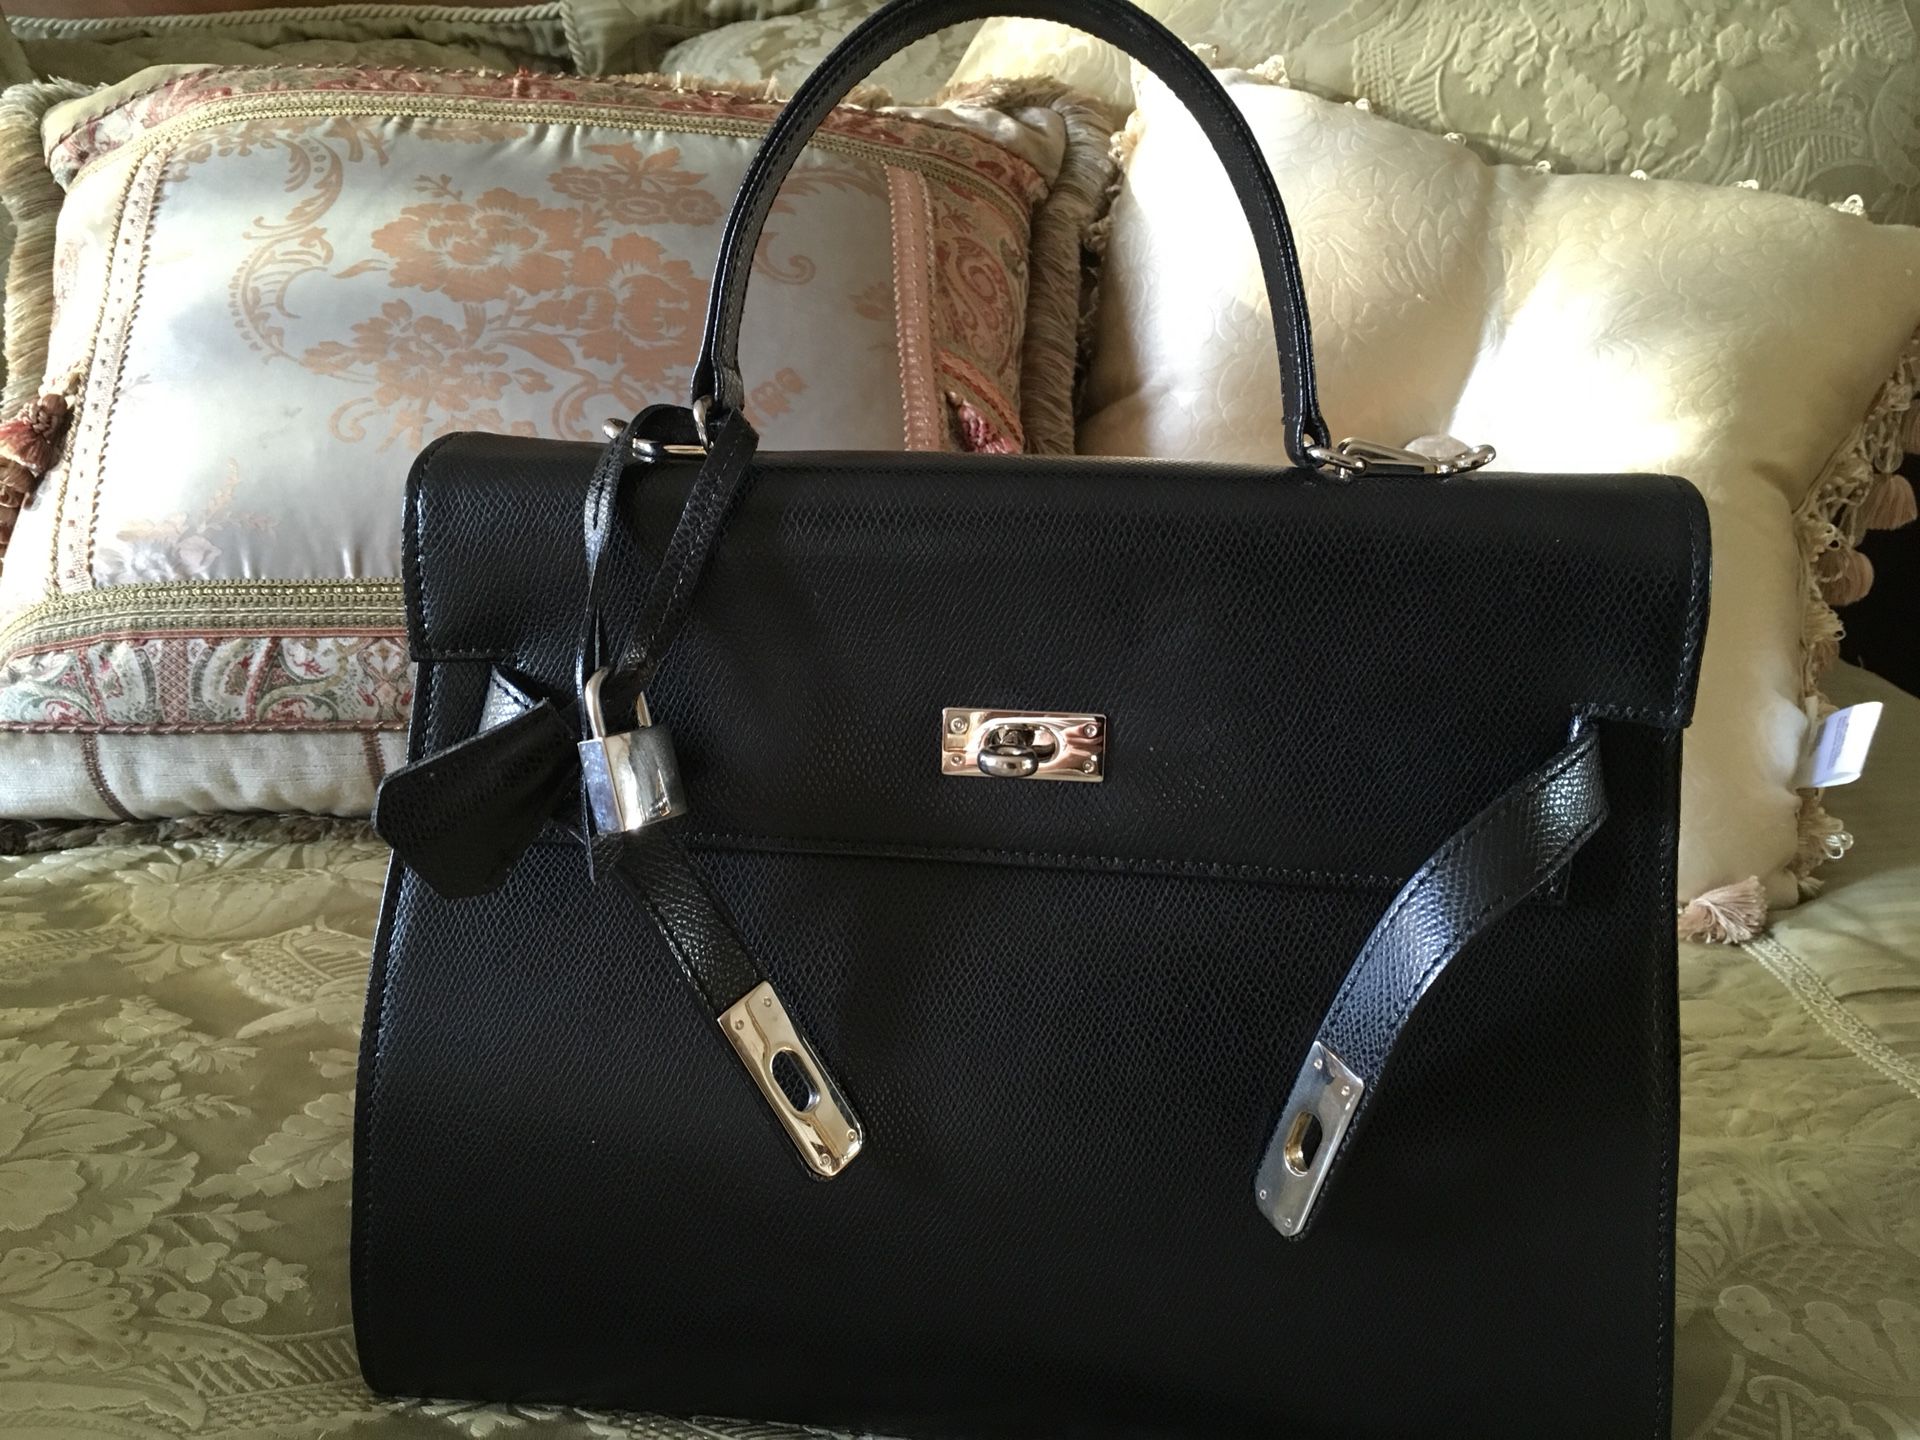 Hermès style Kelly bag